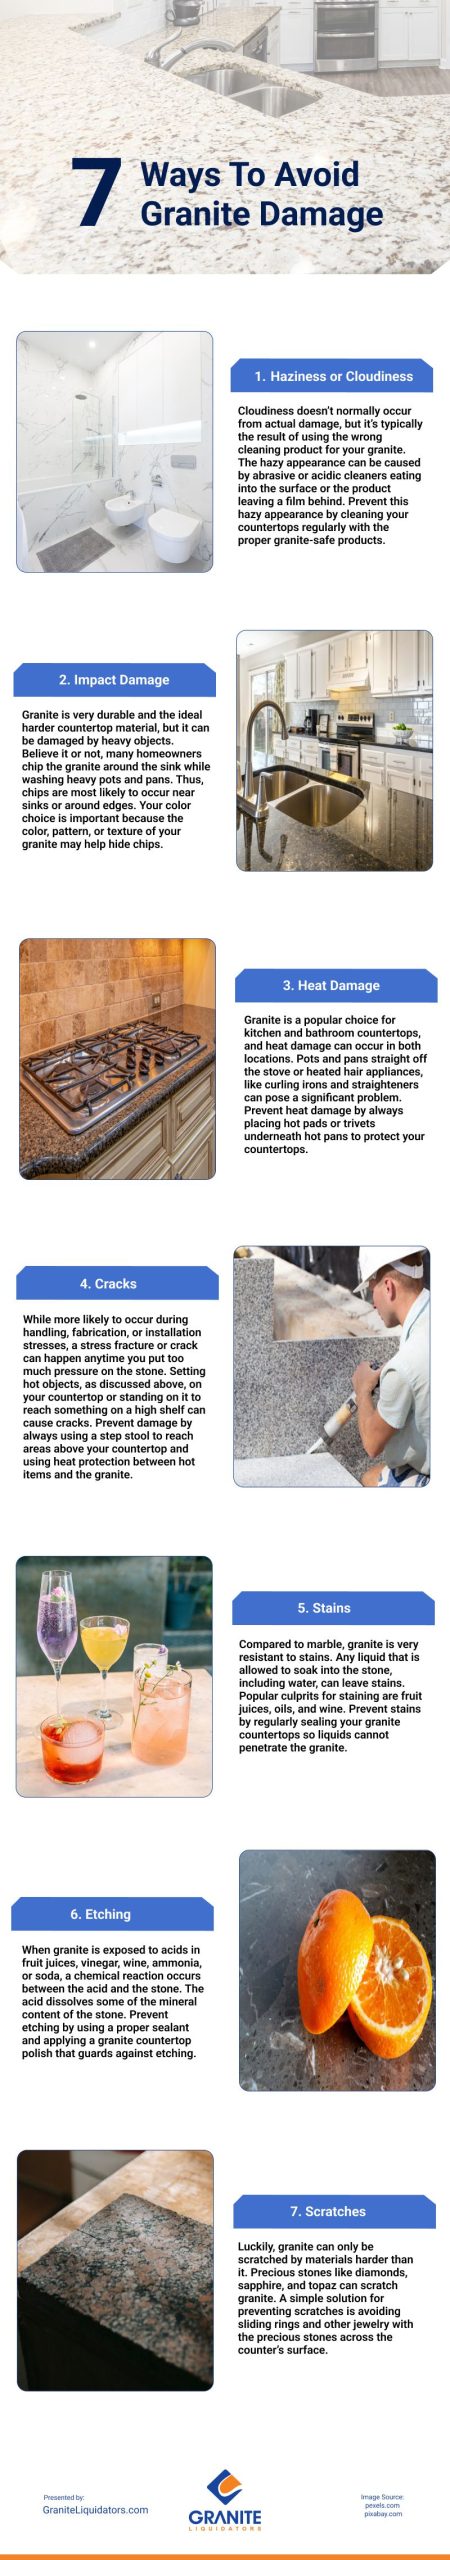 7 Ways to Avoid Granite Damage Infographic